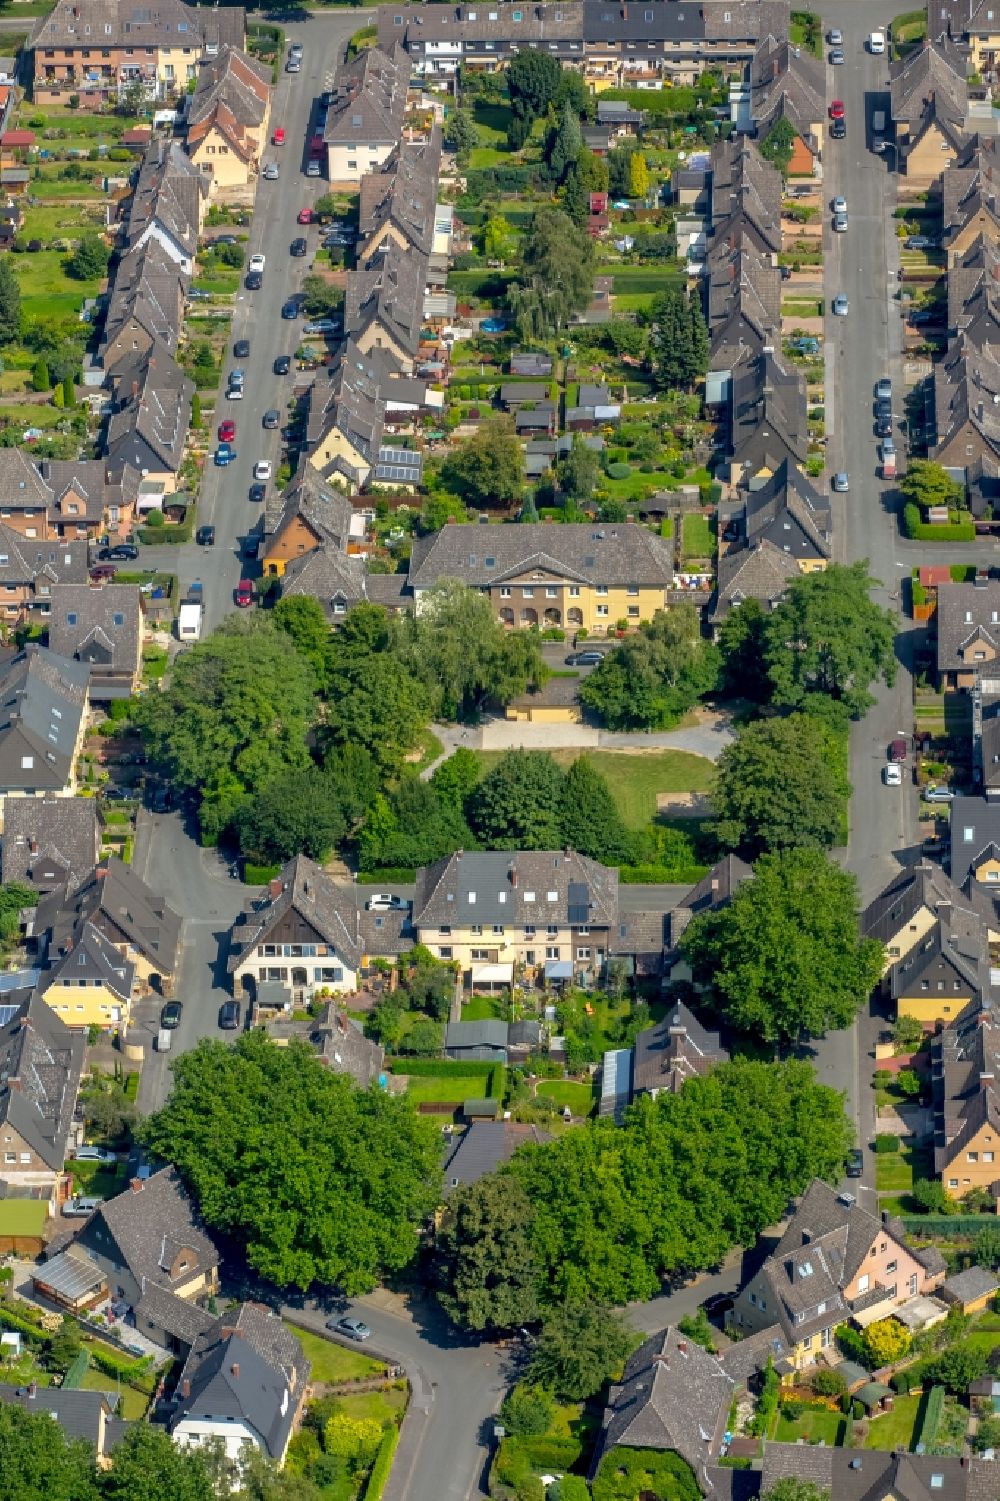 Aerial photograph Dortmund - Residential area of a multi-family house settlement of the settler community Am Sommerberg - Am Winterberg in Dortmund in the state North Rhine-Westphalia